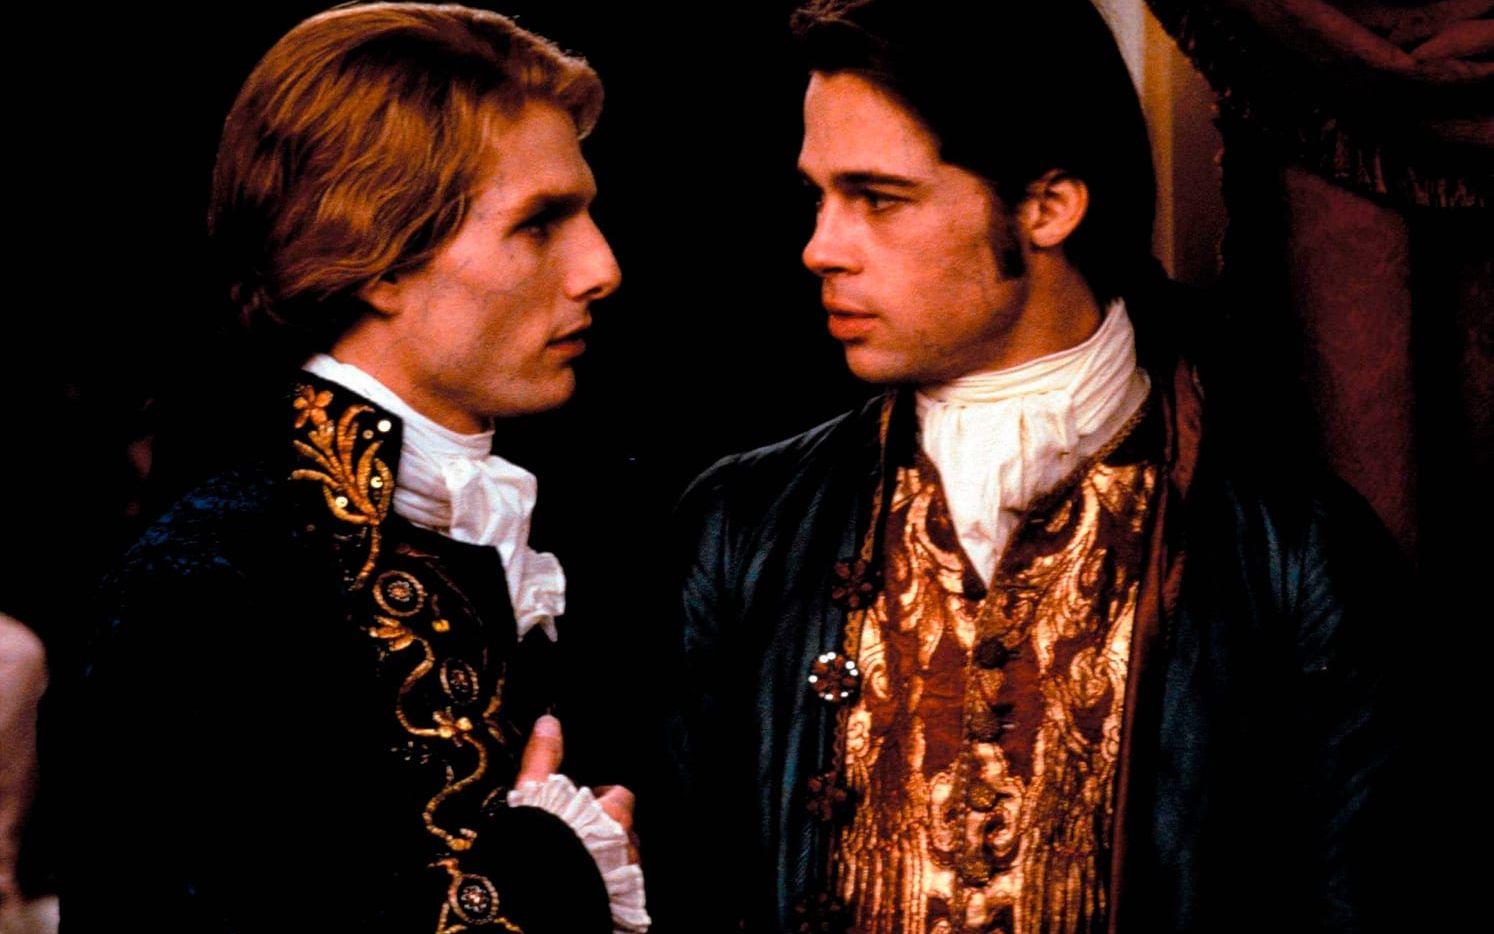 1994 spelade Brad Pitt vampyr bredvid Tom Cruise i filmatiseringen av Anne Rices "En vampyrs bekännelse" Foto: Warner Bros